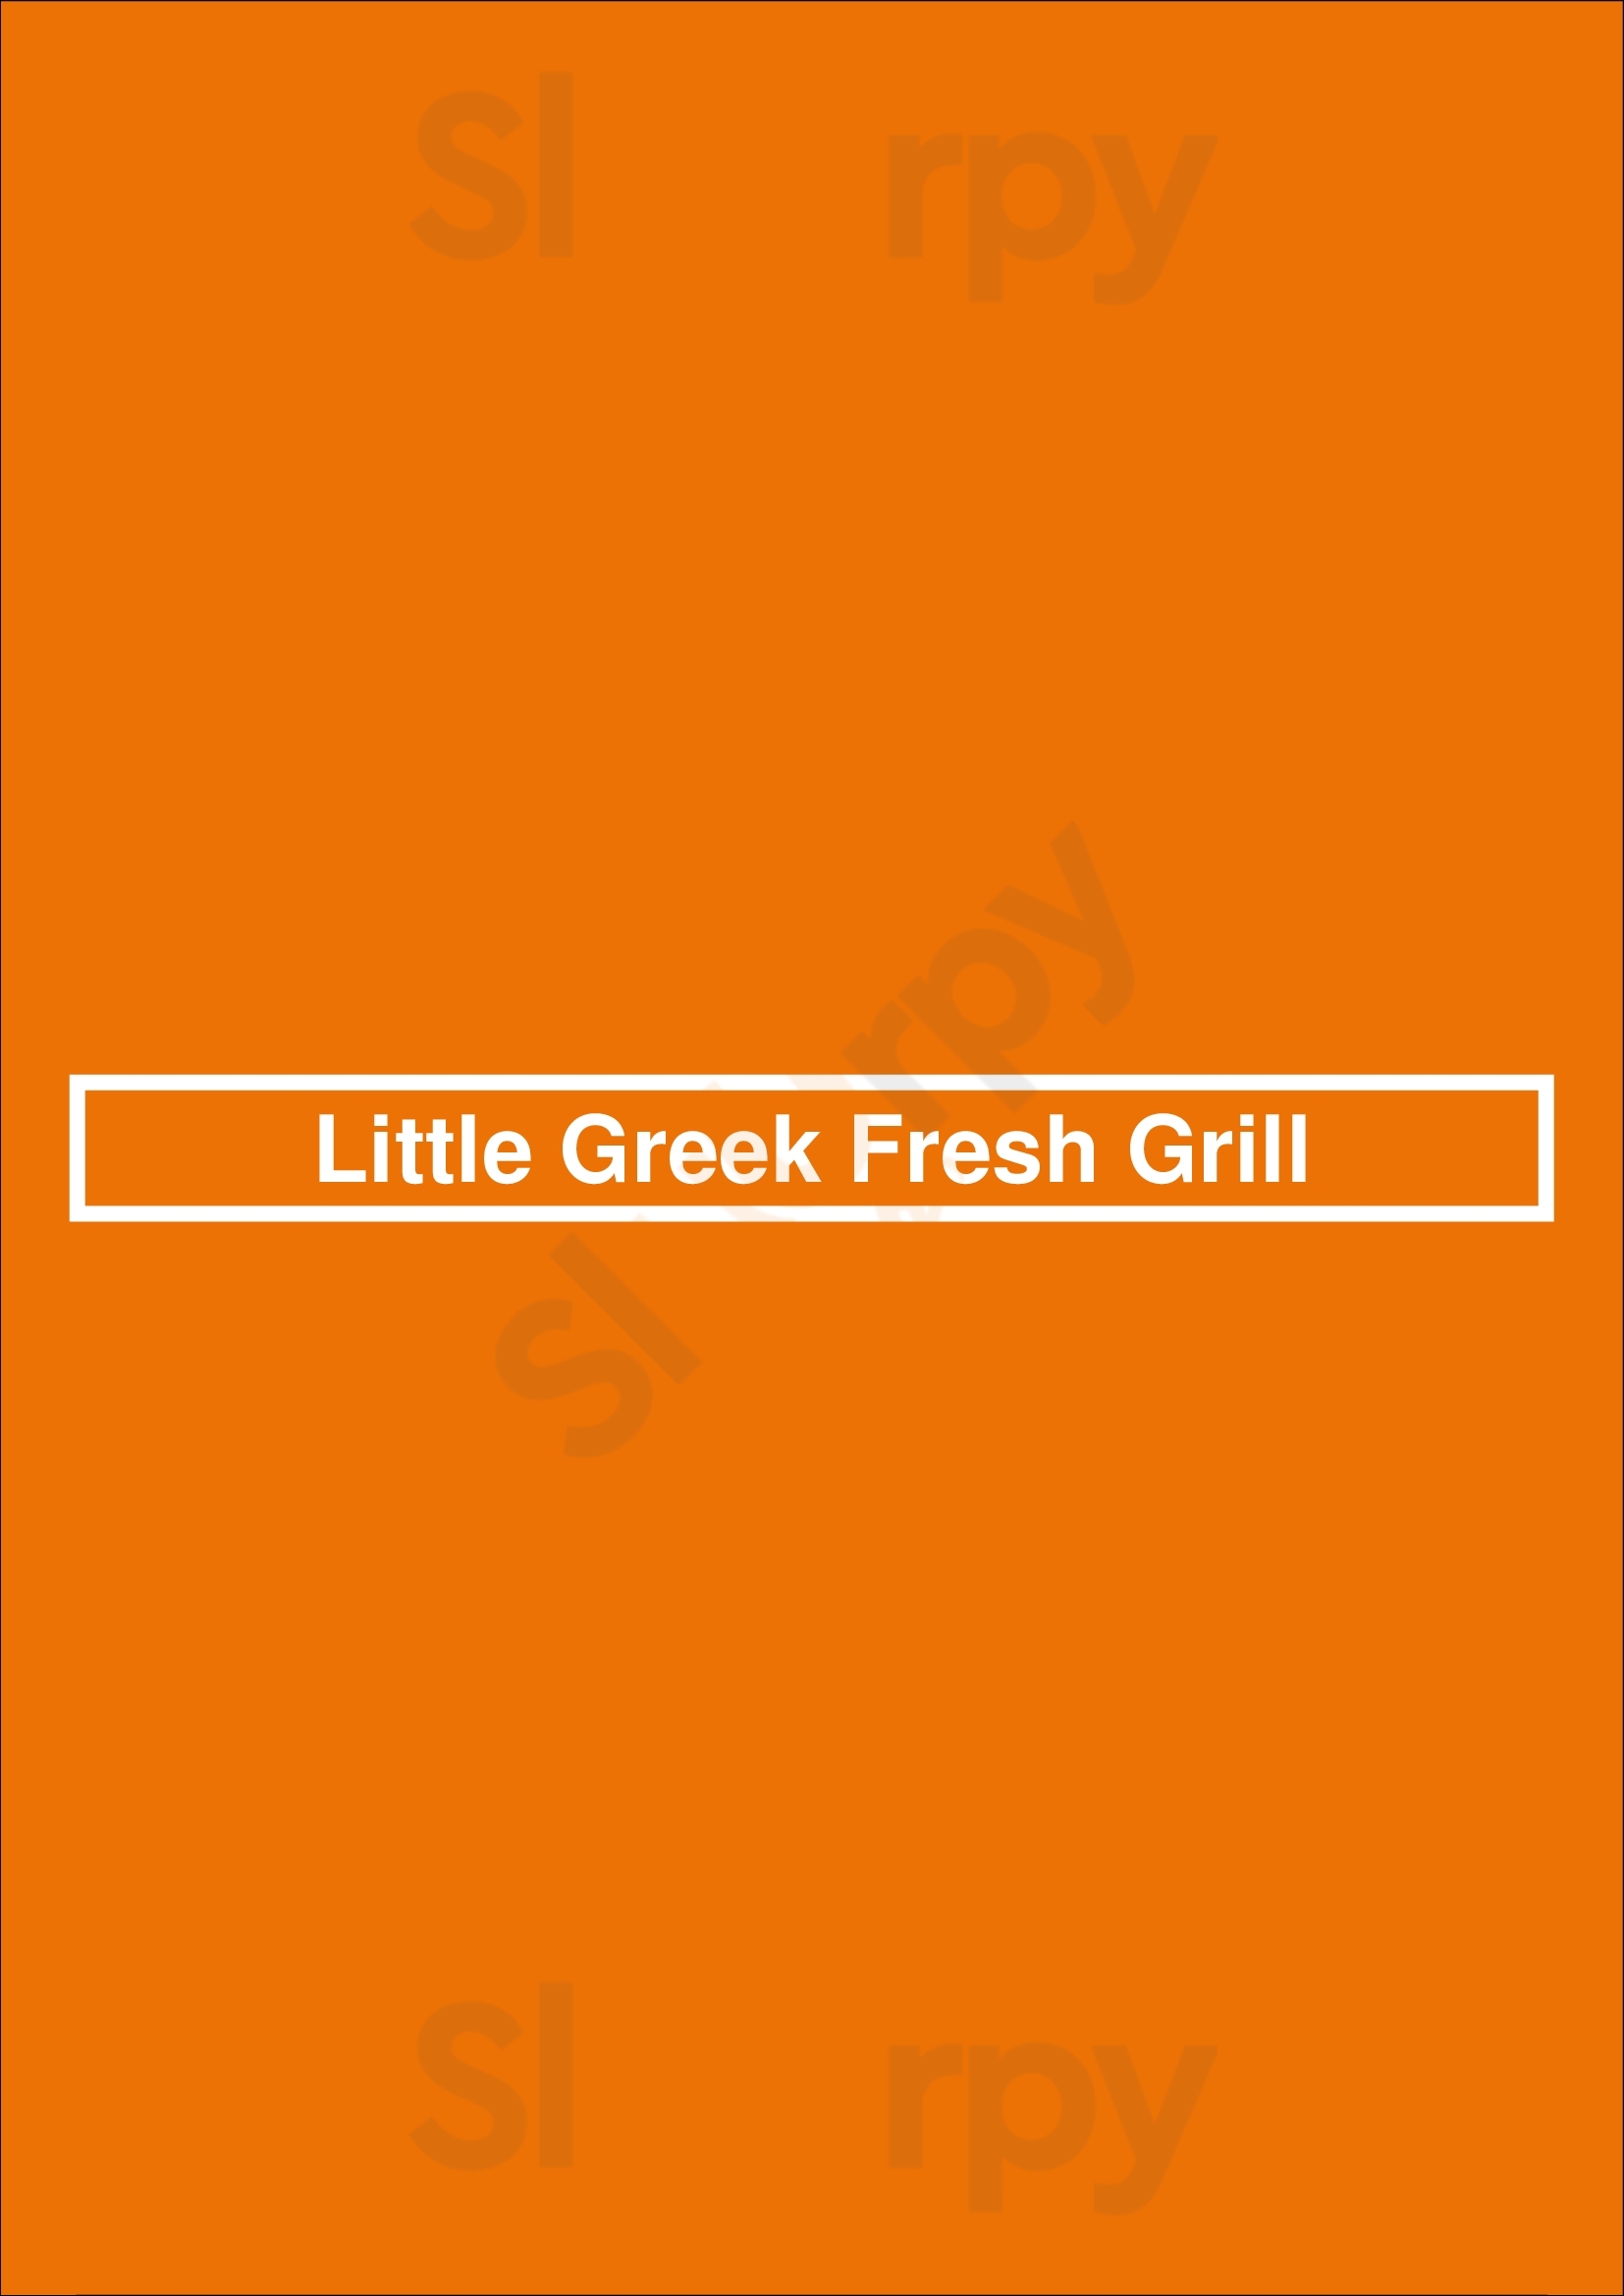 Little Greek Fresh Grill - Lee Vista Promenade Orlando Menu - 1